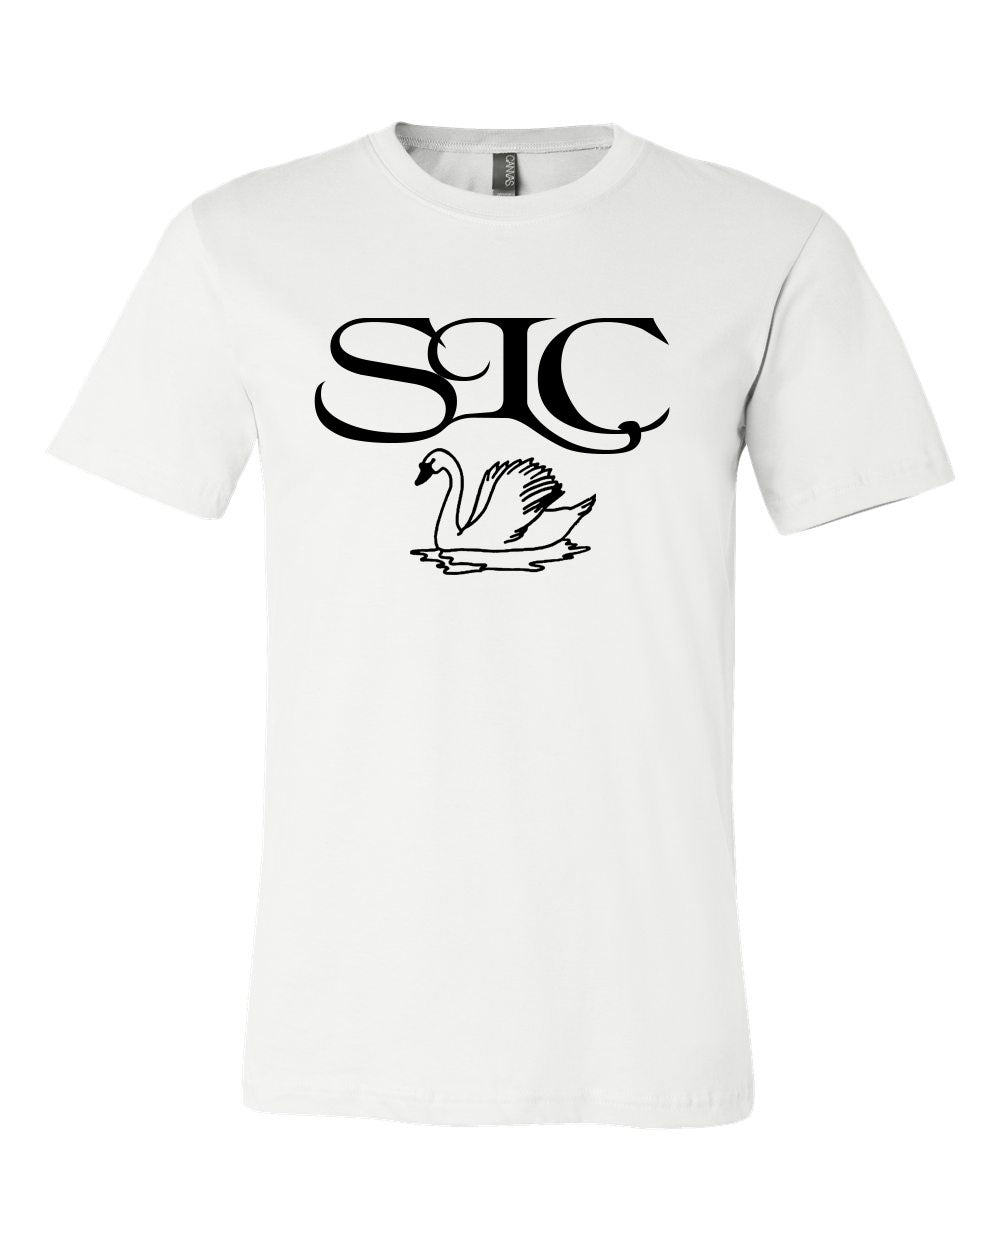 Seneca Lake Design 6 T-Shirt